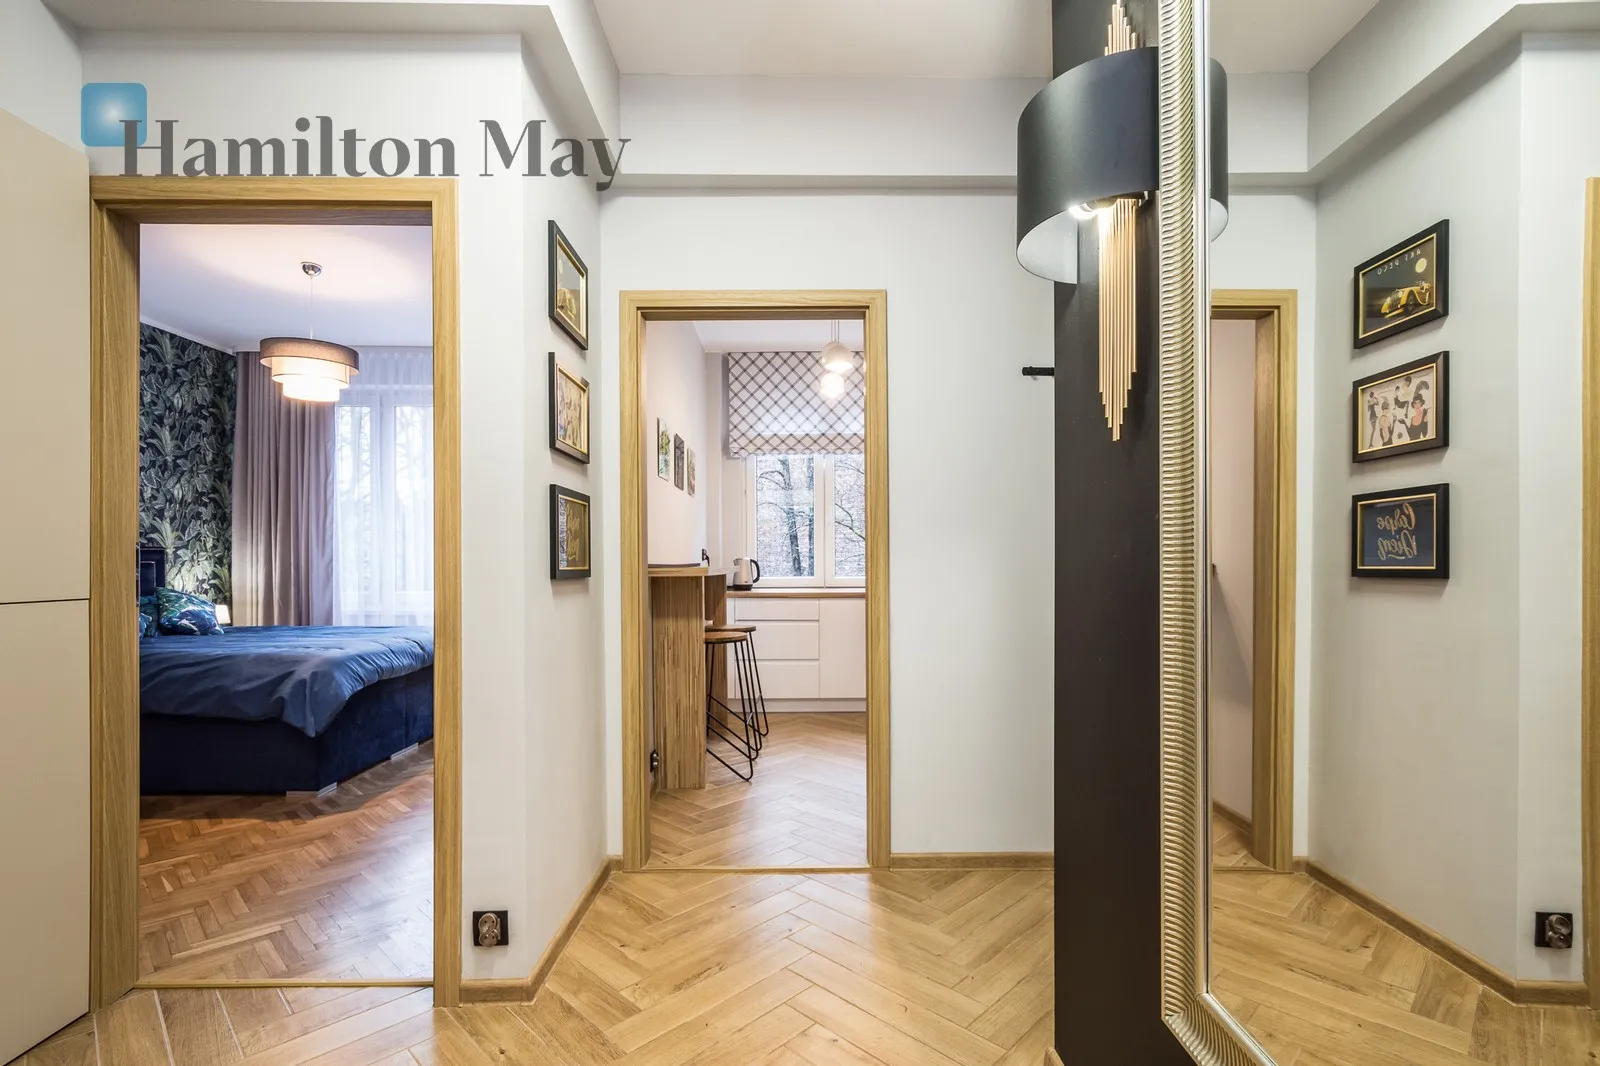 Price: 3200 PLN Bedrooms: 1 Bathrooms: 1 Size: 48m2 Price/m2: 67 PLN - slider